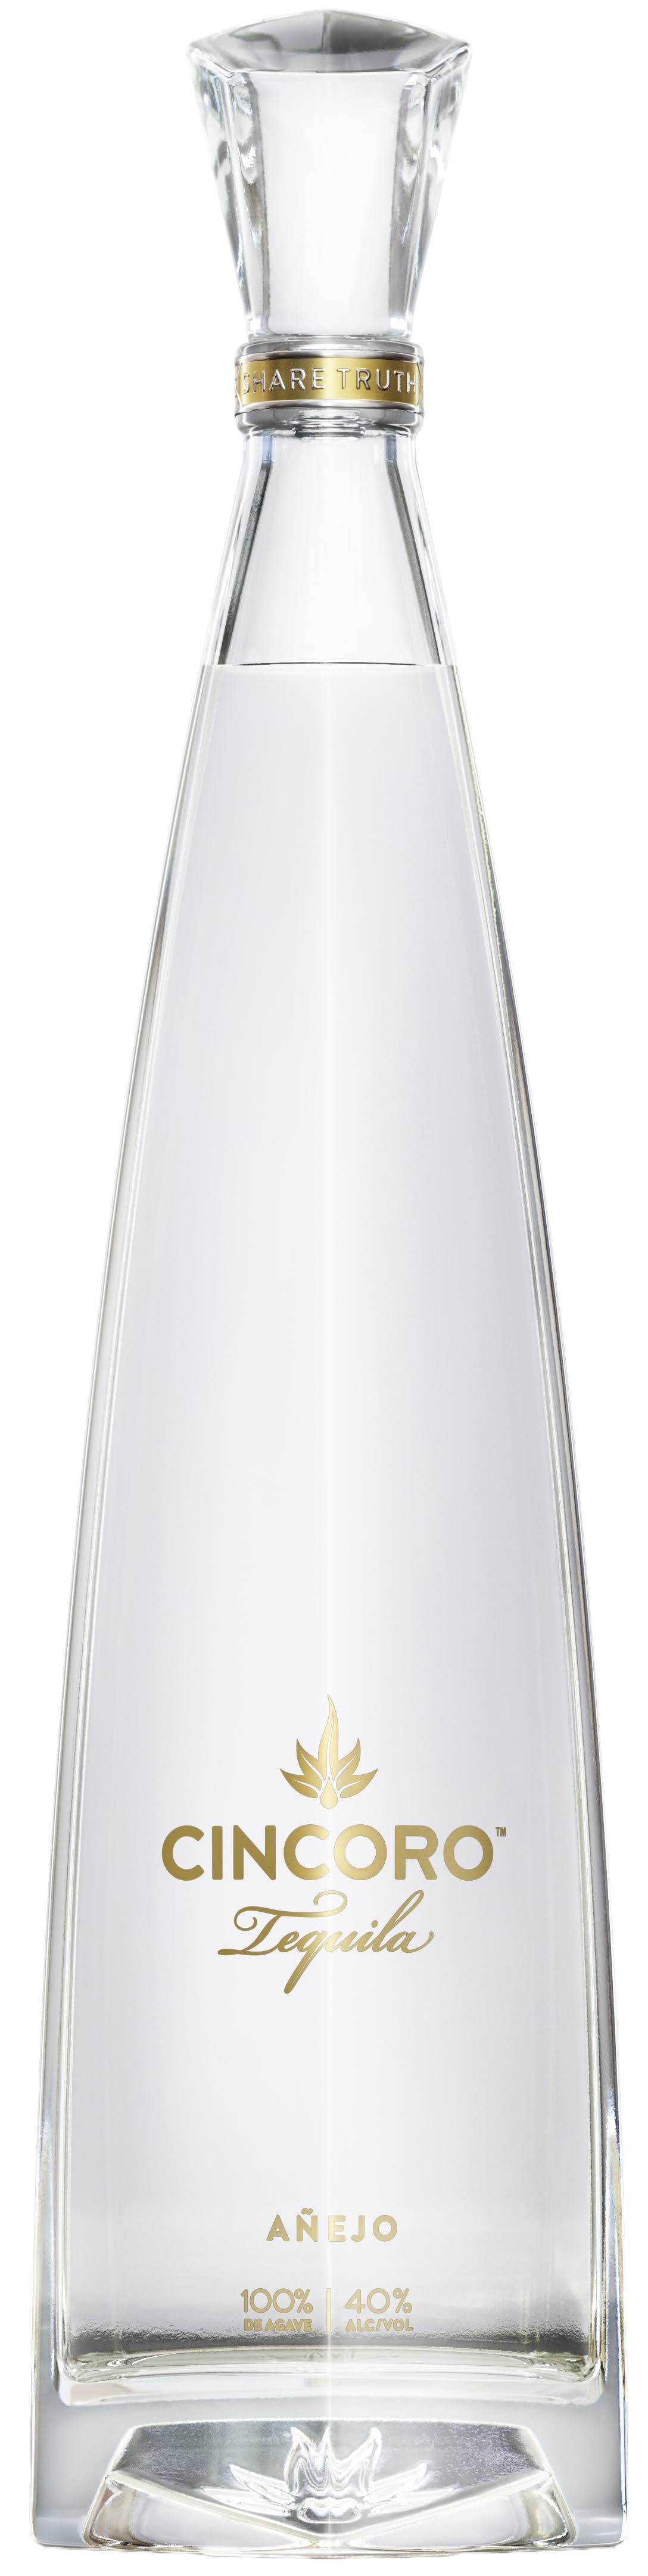 Cincoro Tequila Blanco (750 mL)